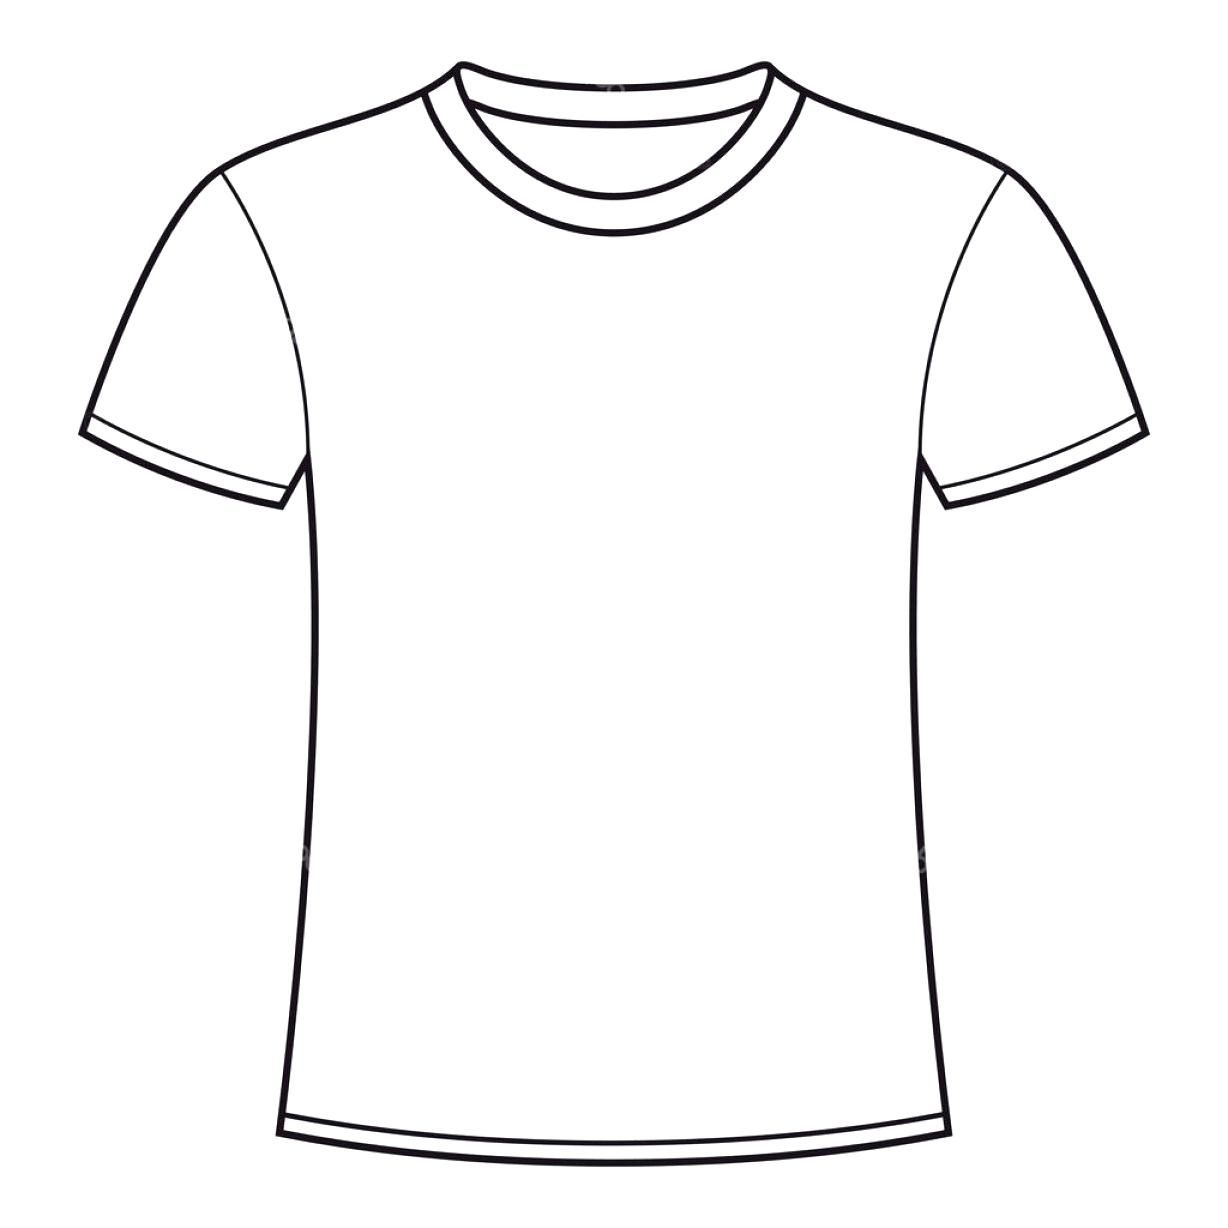 The Inspiring Template: Blank Vector Tee Shirts T Shirt inside Blank T Shirt Outline Template